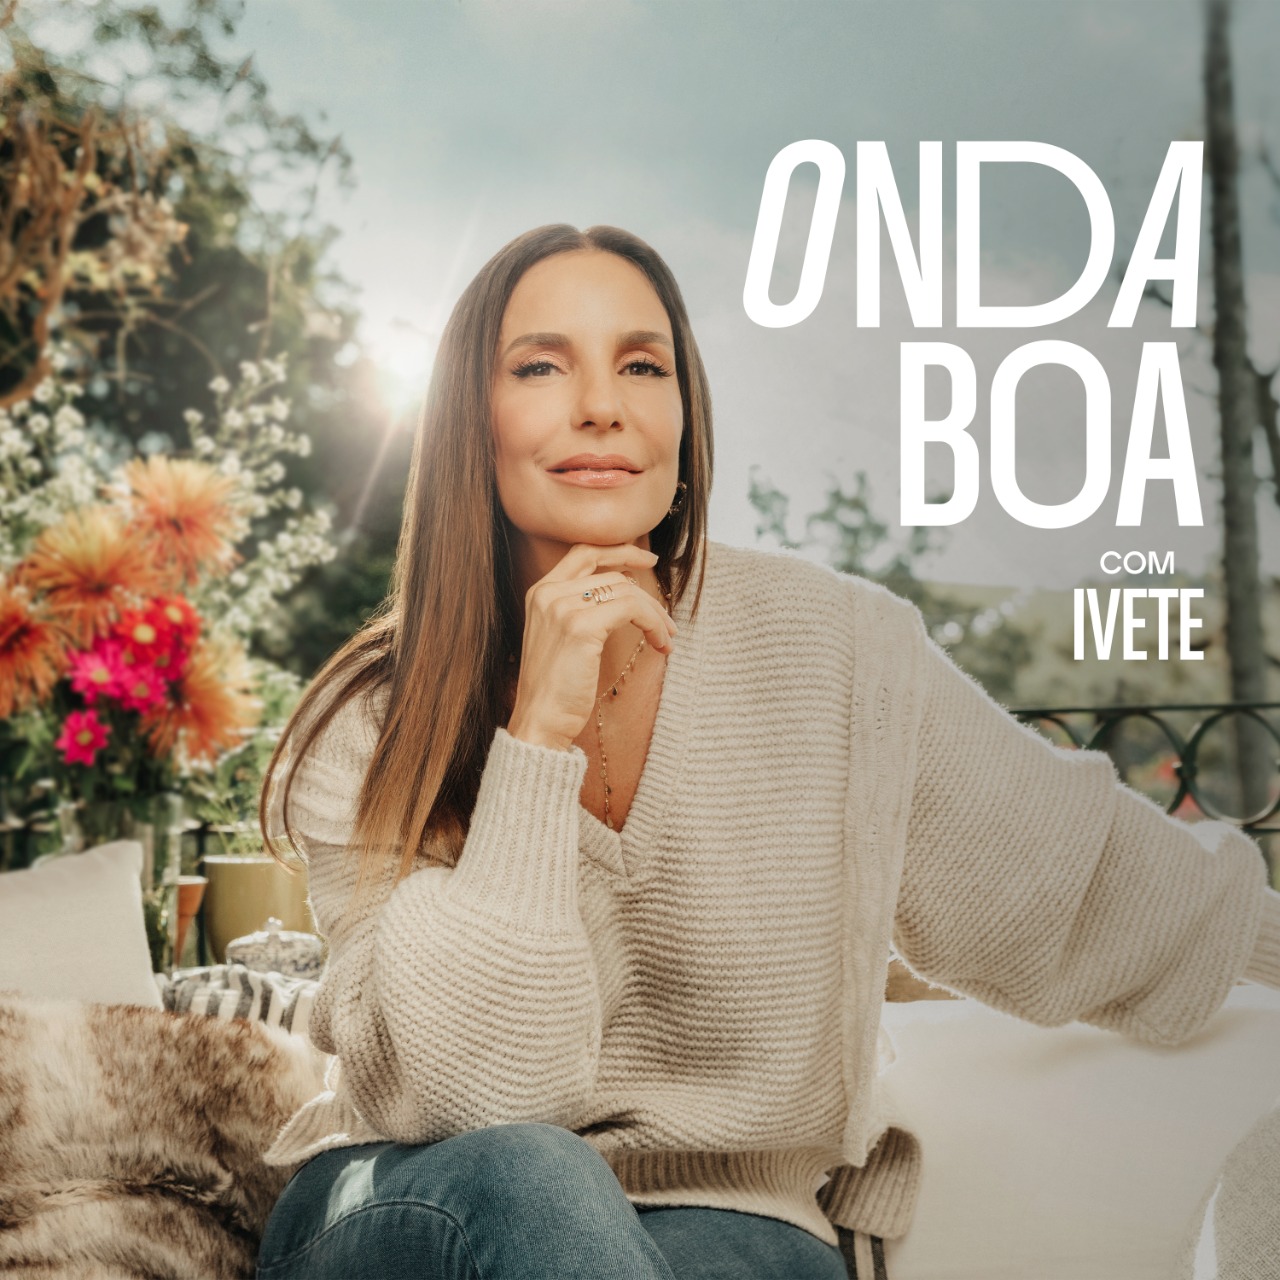 Ivete Sangalo lança álbum “Onda Boa”